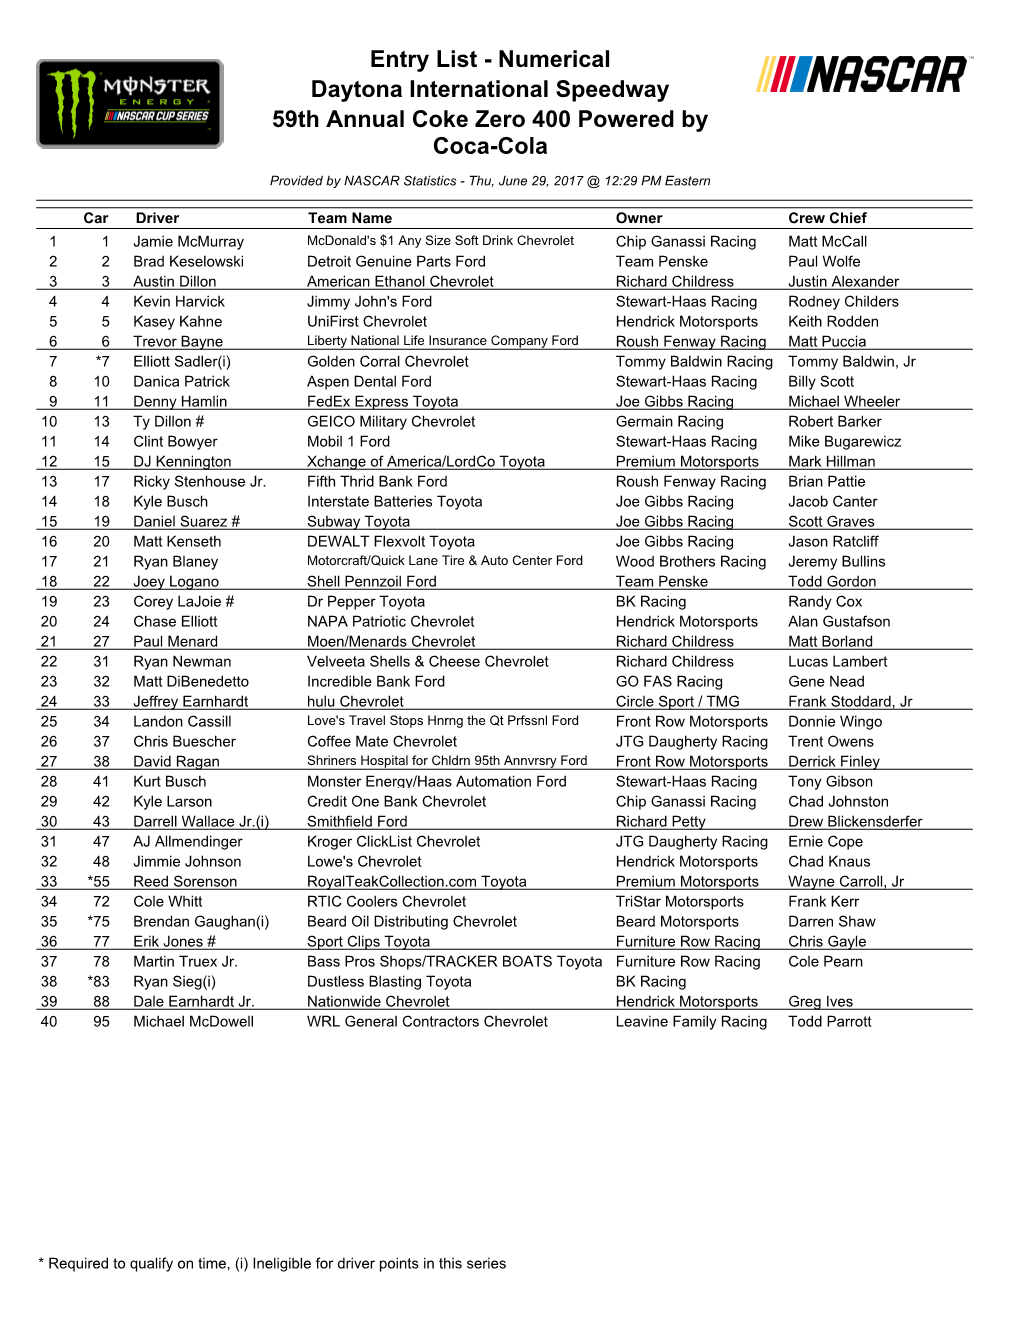 Entry List - Numerical Daytona International Speedway 59Th Annual Coke Zero 400 Powered by Coca-Cola